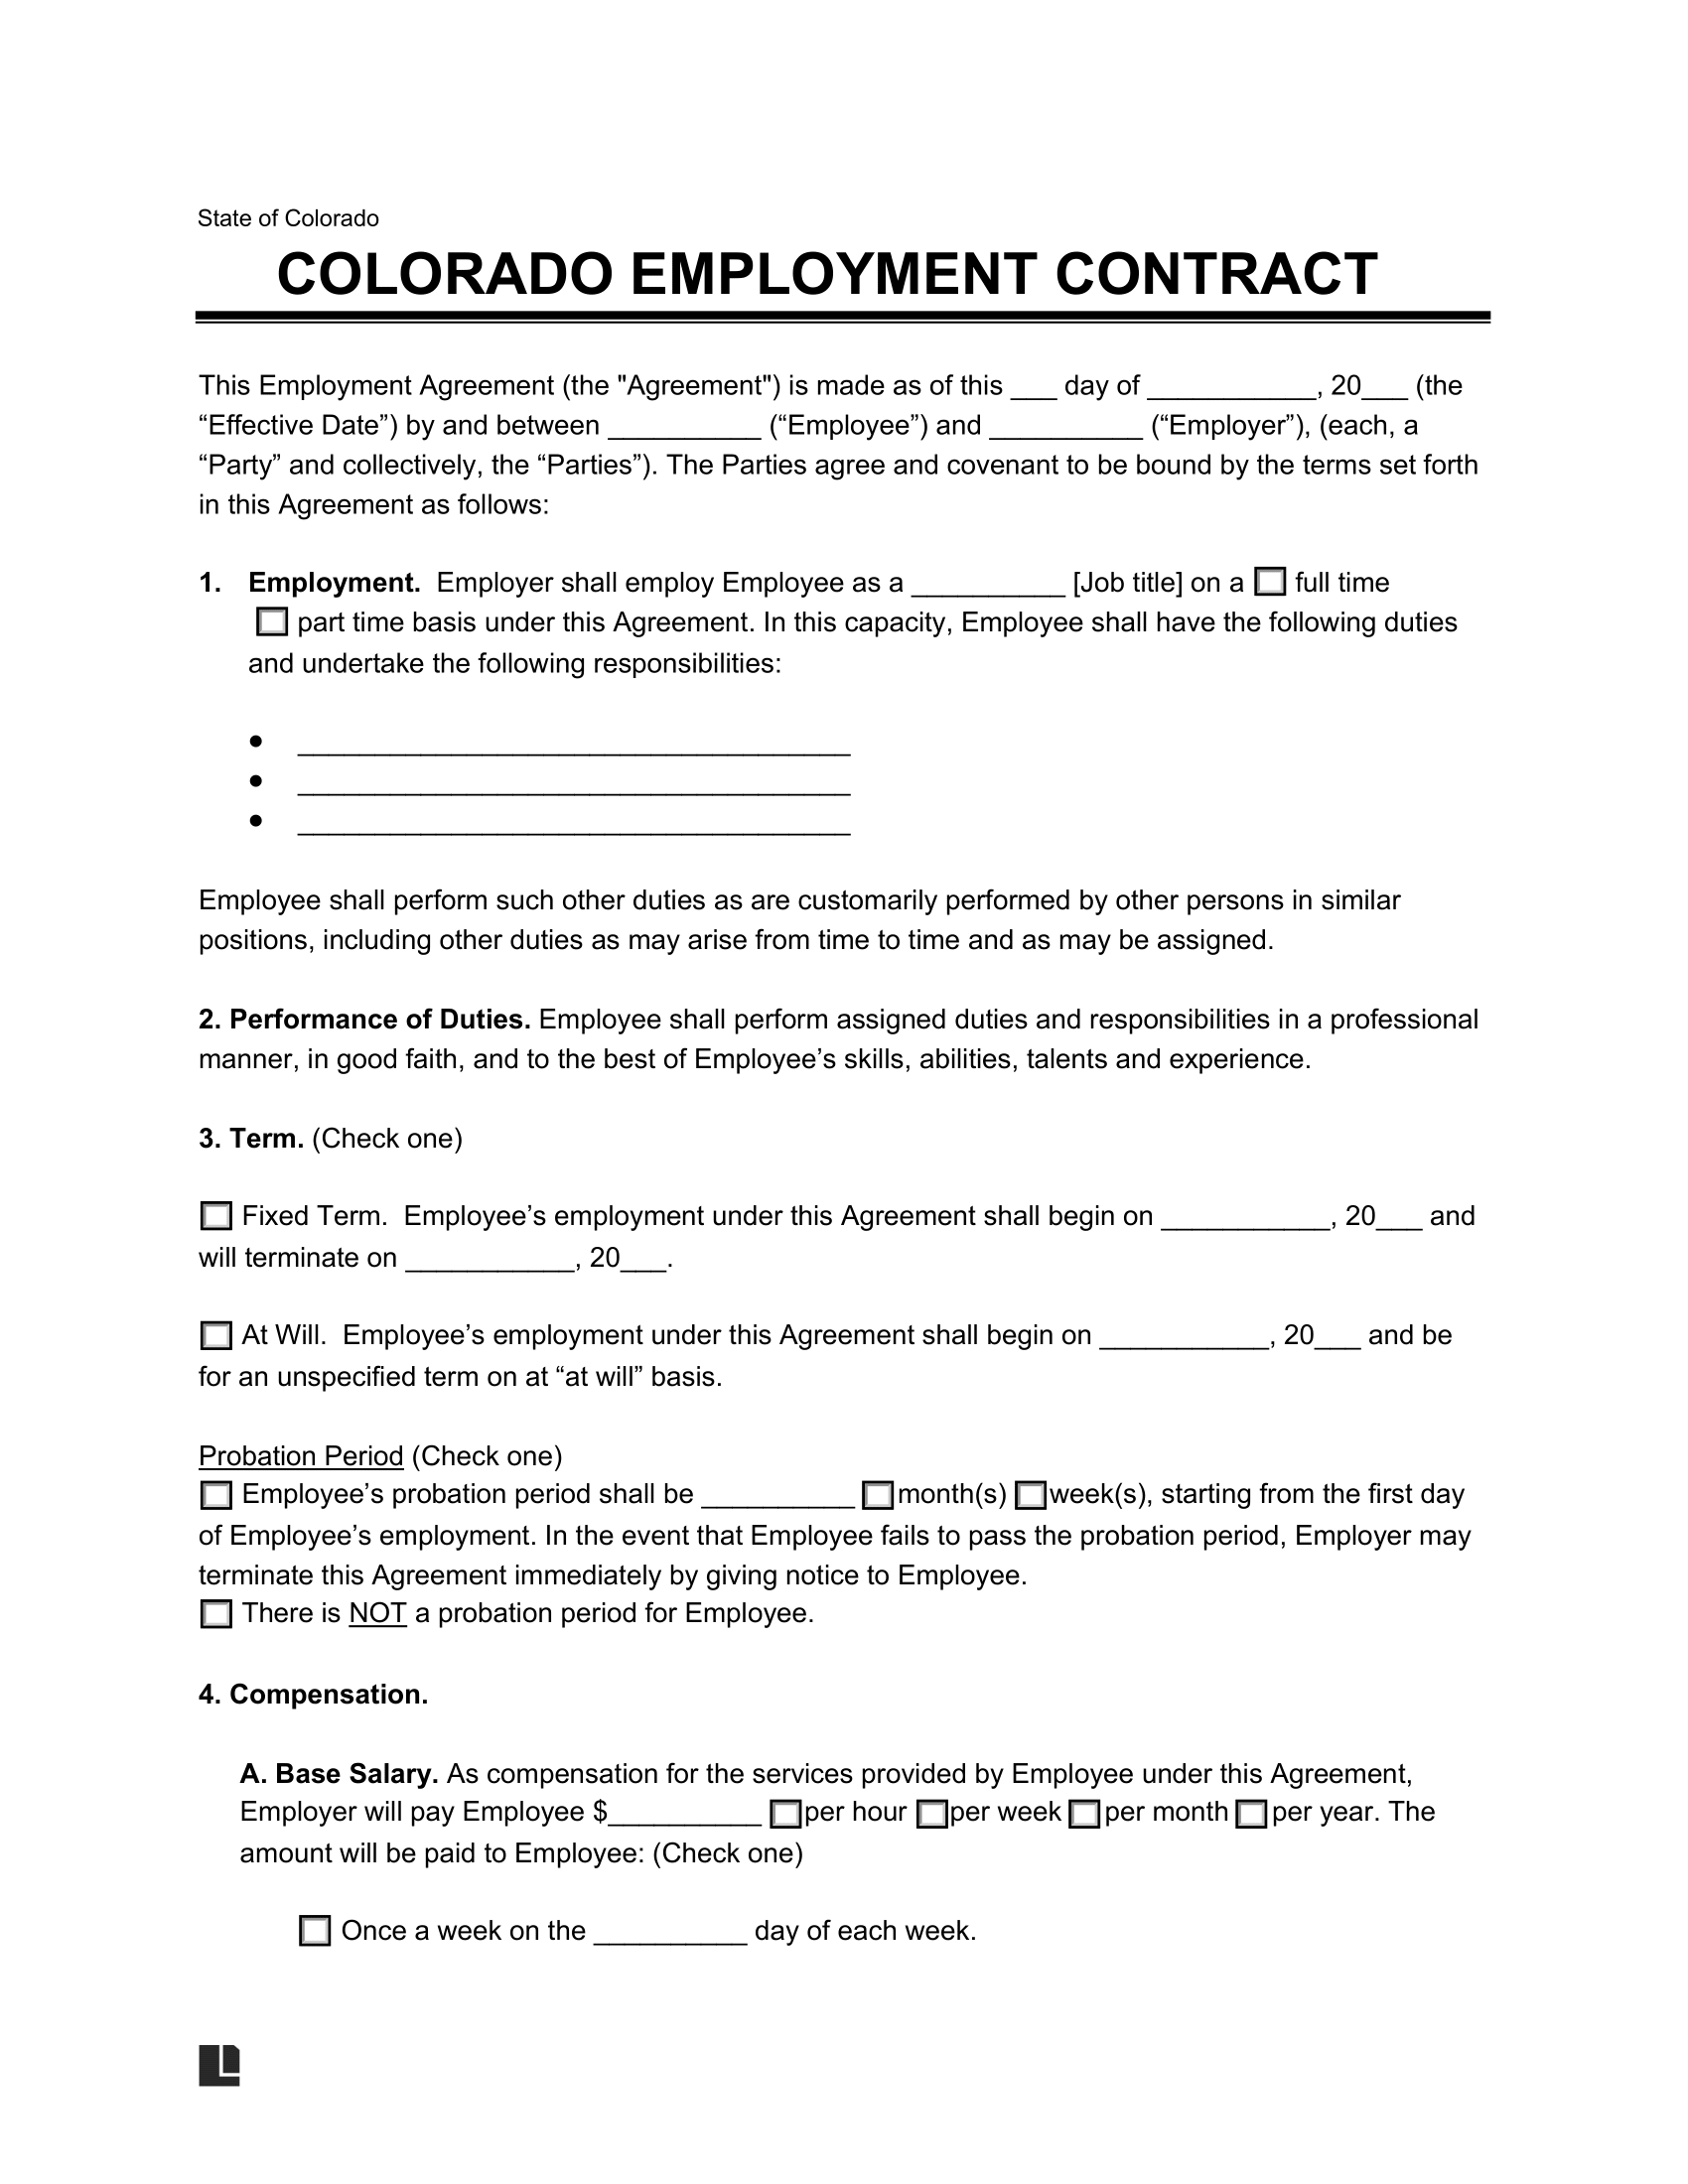 colorado employment contract template